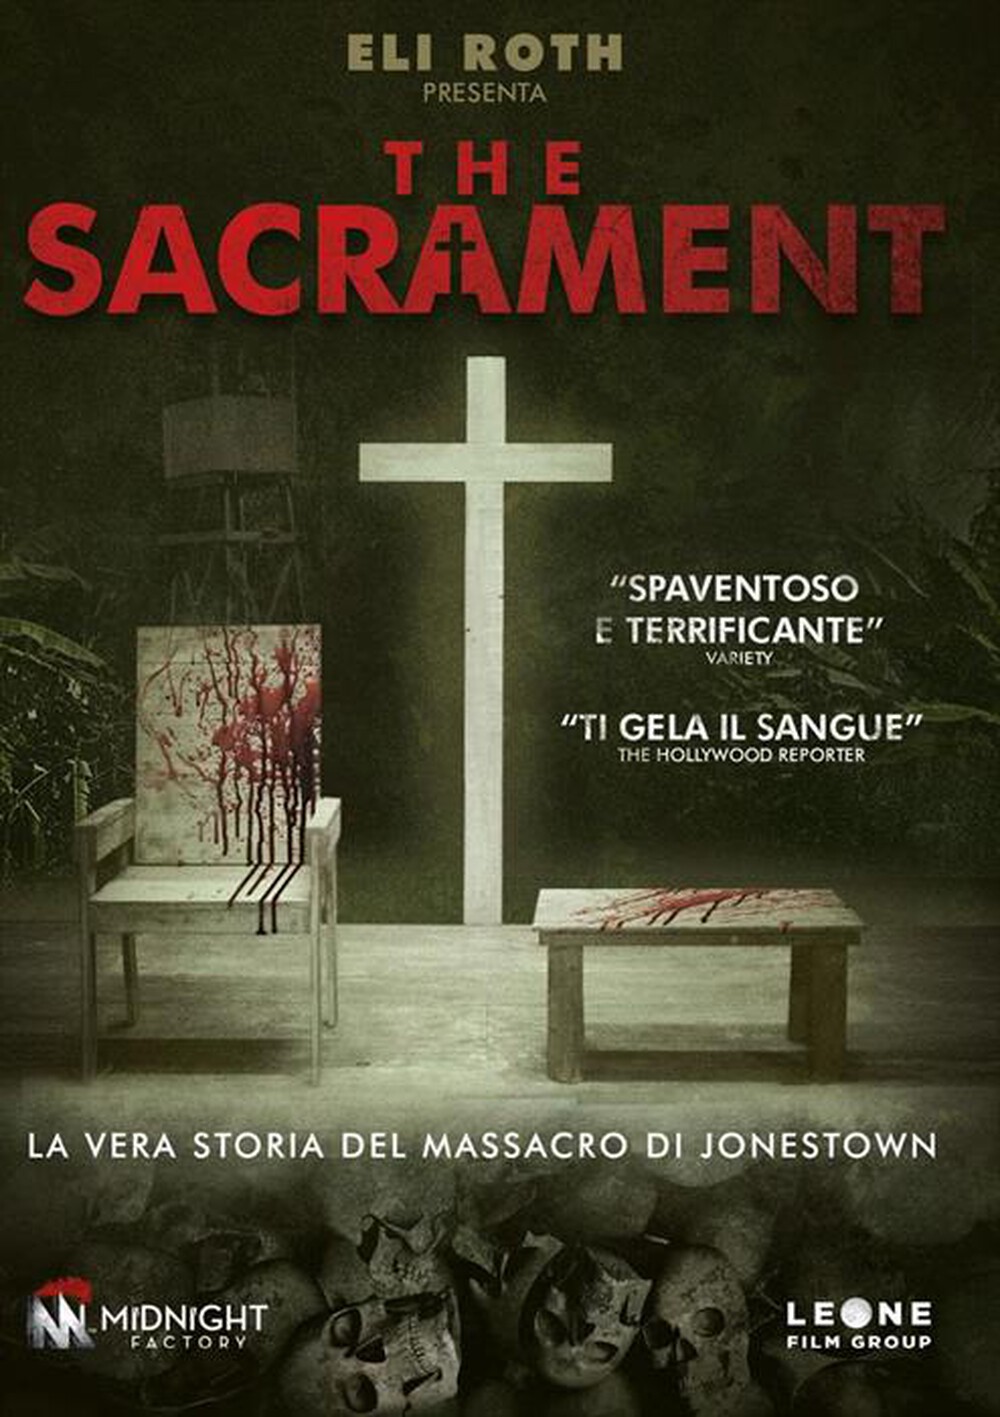 "Midnight Factory - Sacrament (The) (Standard Edition) - "